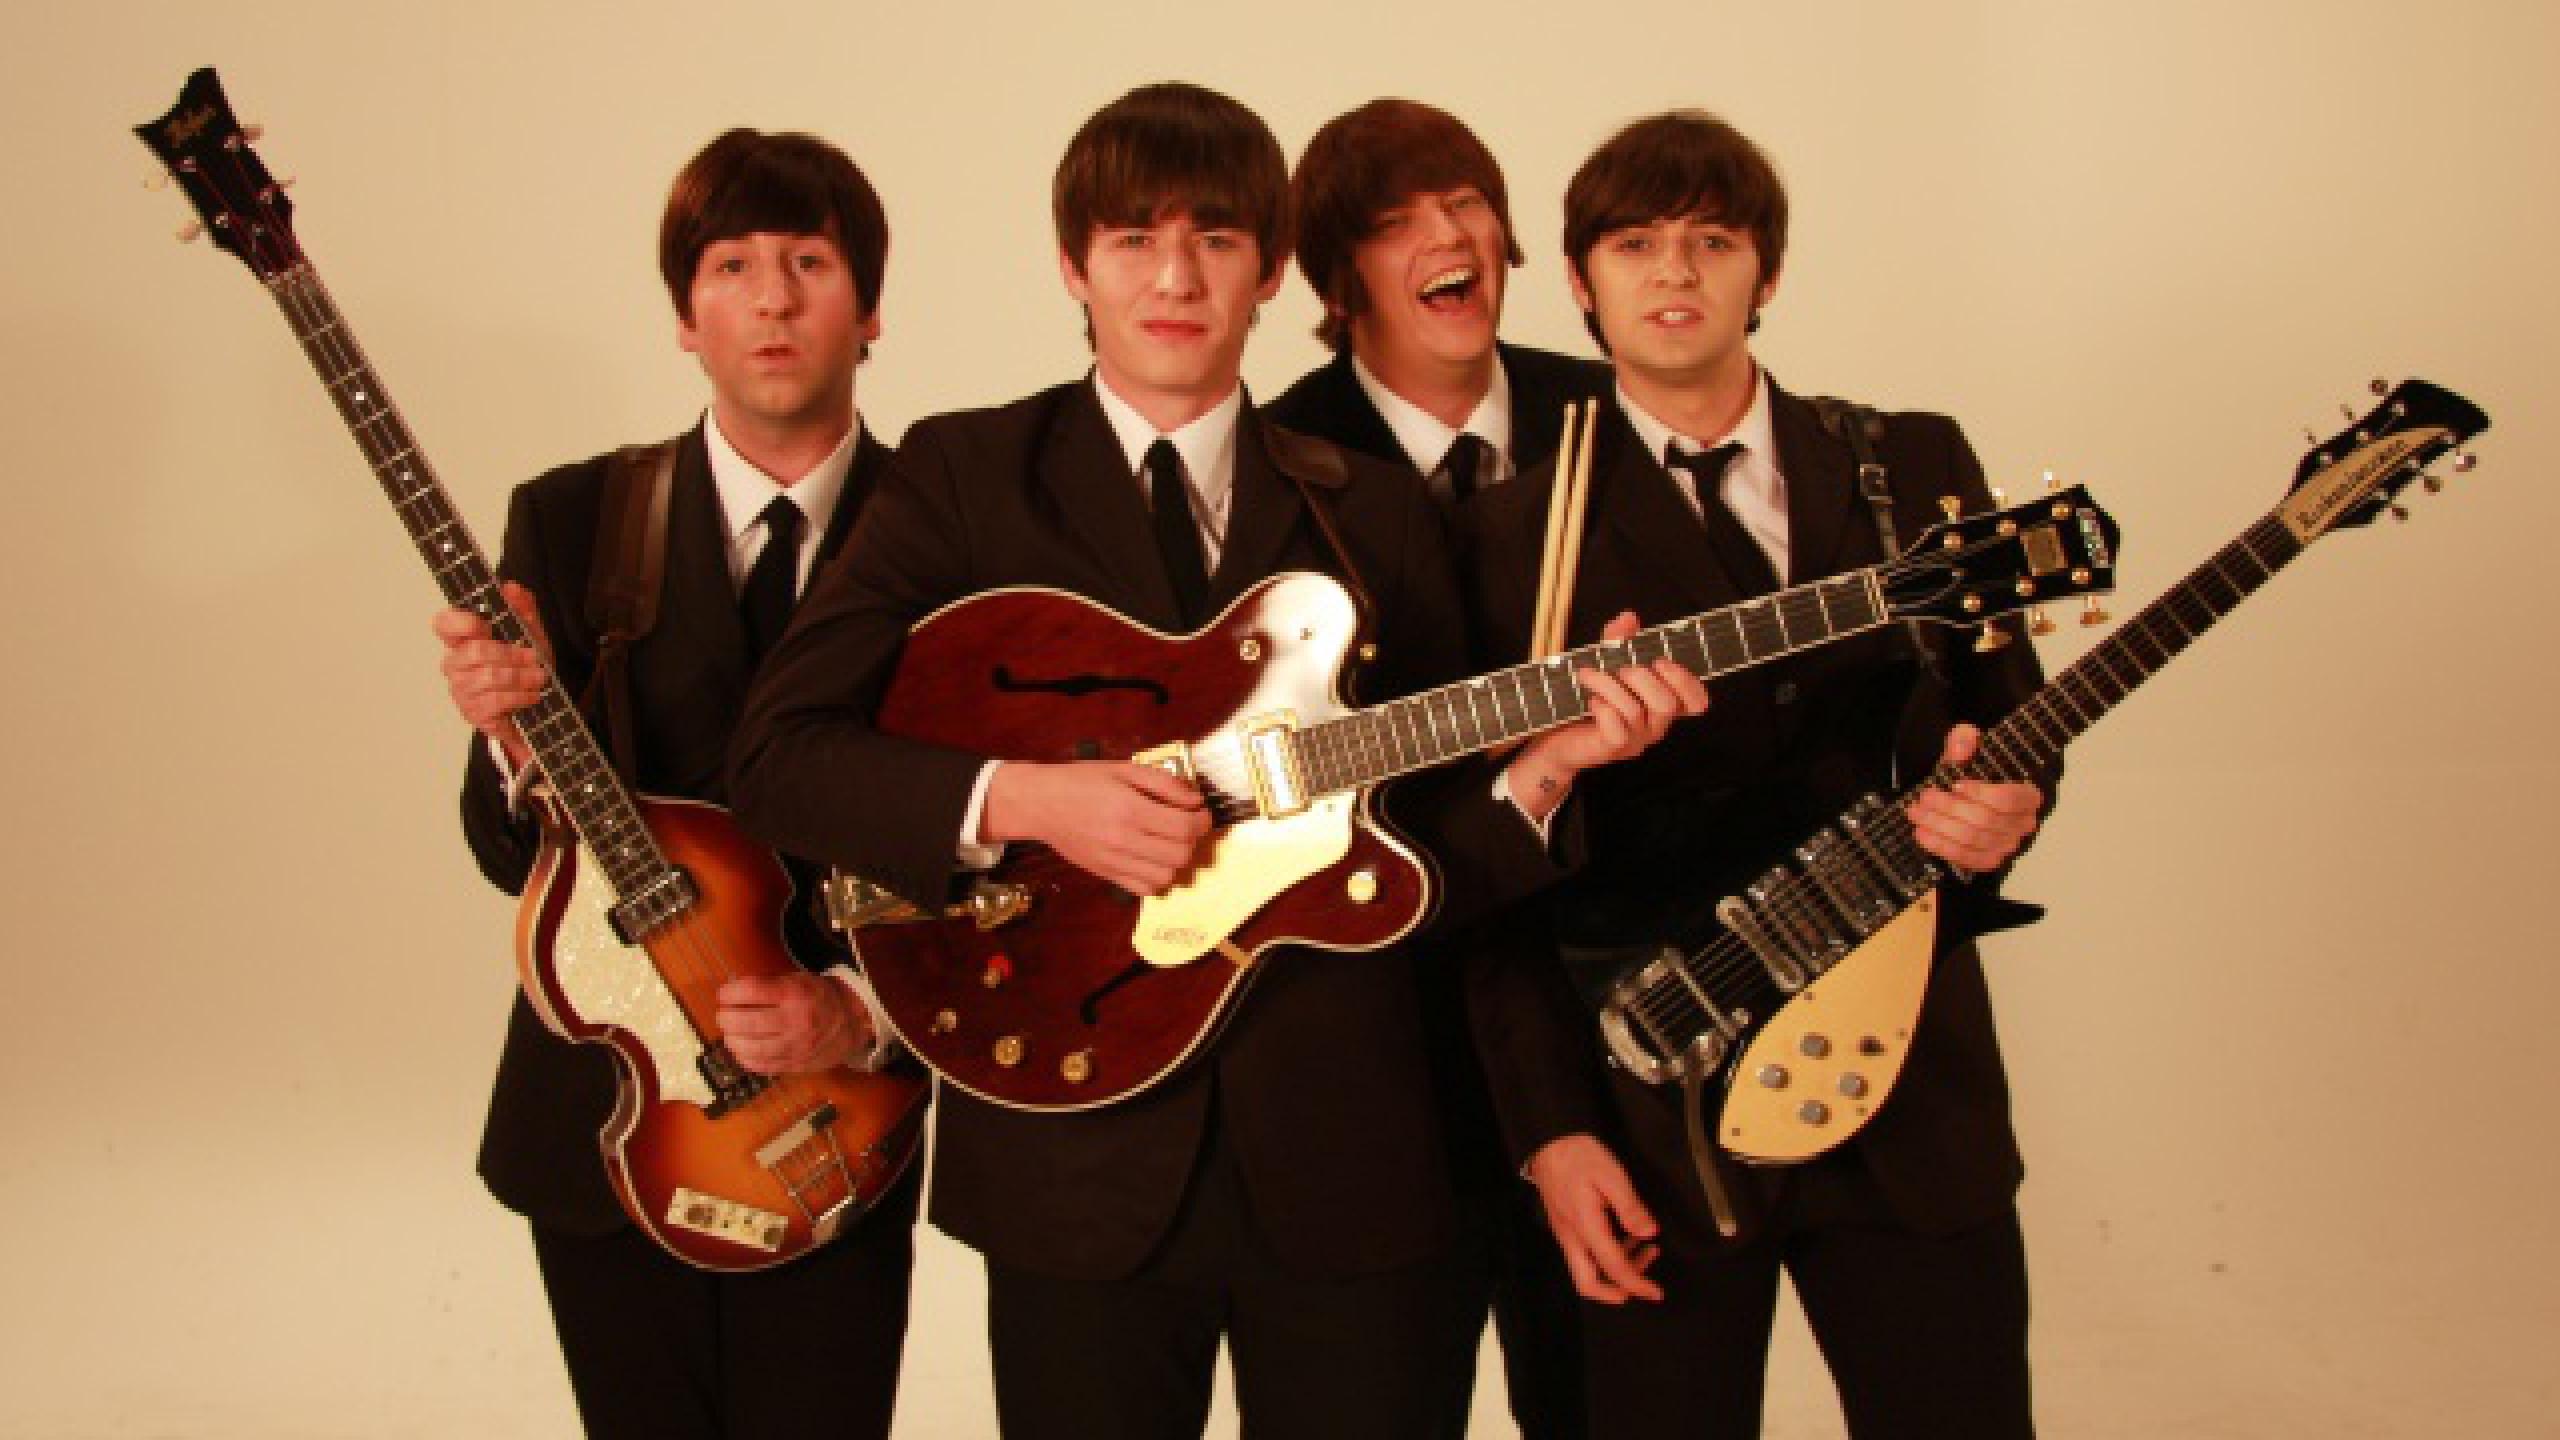 Them Beatles 1492562474.53.2560x1440 